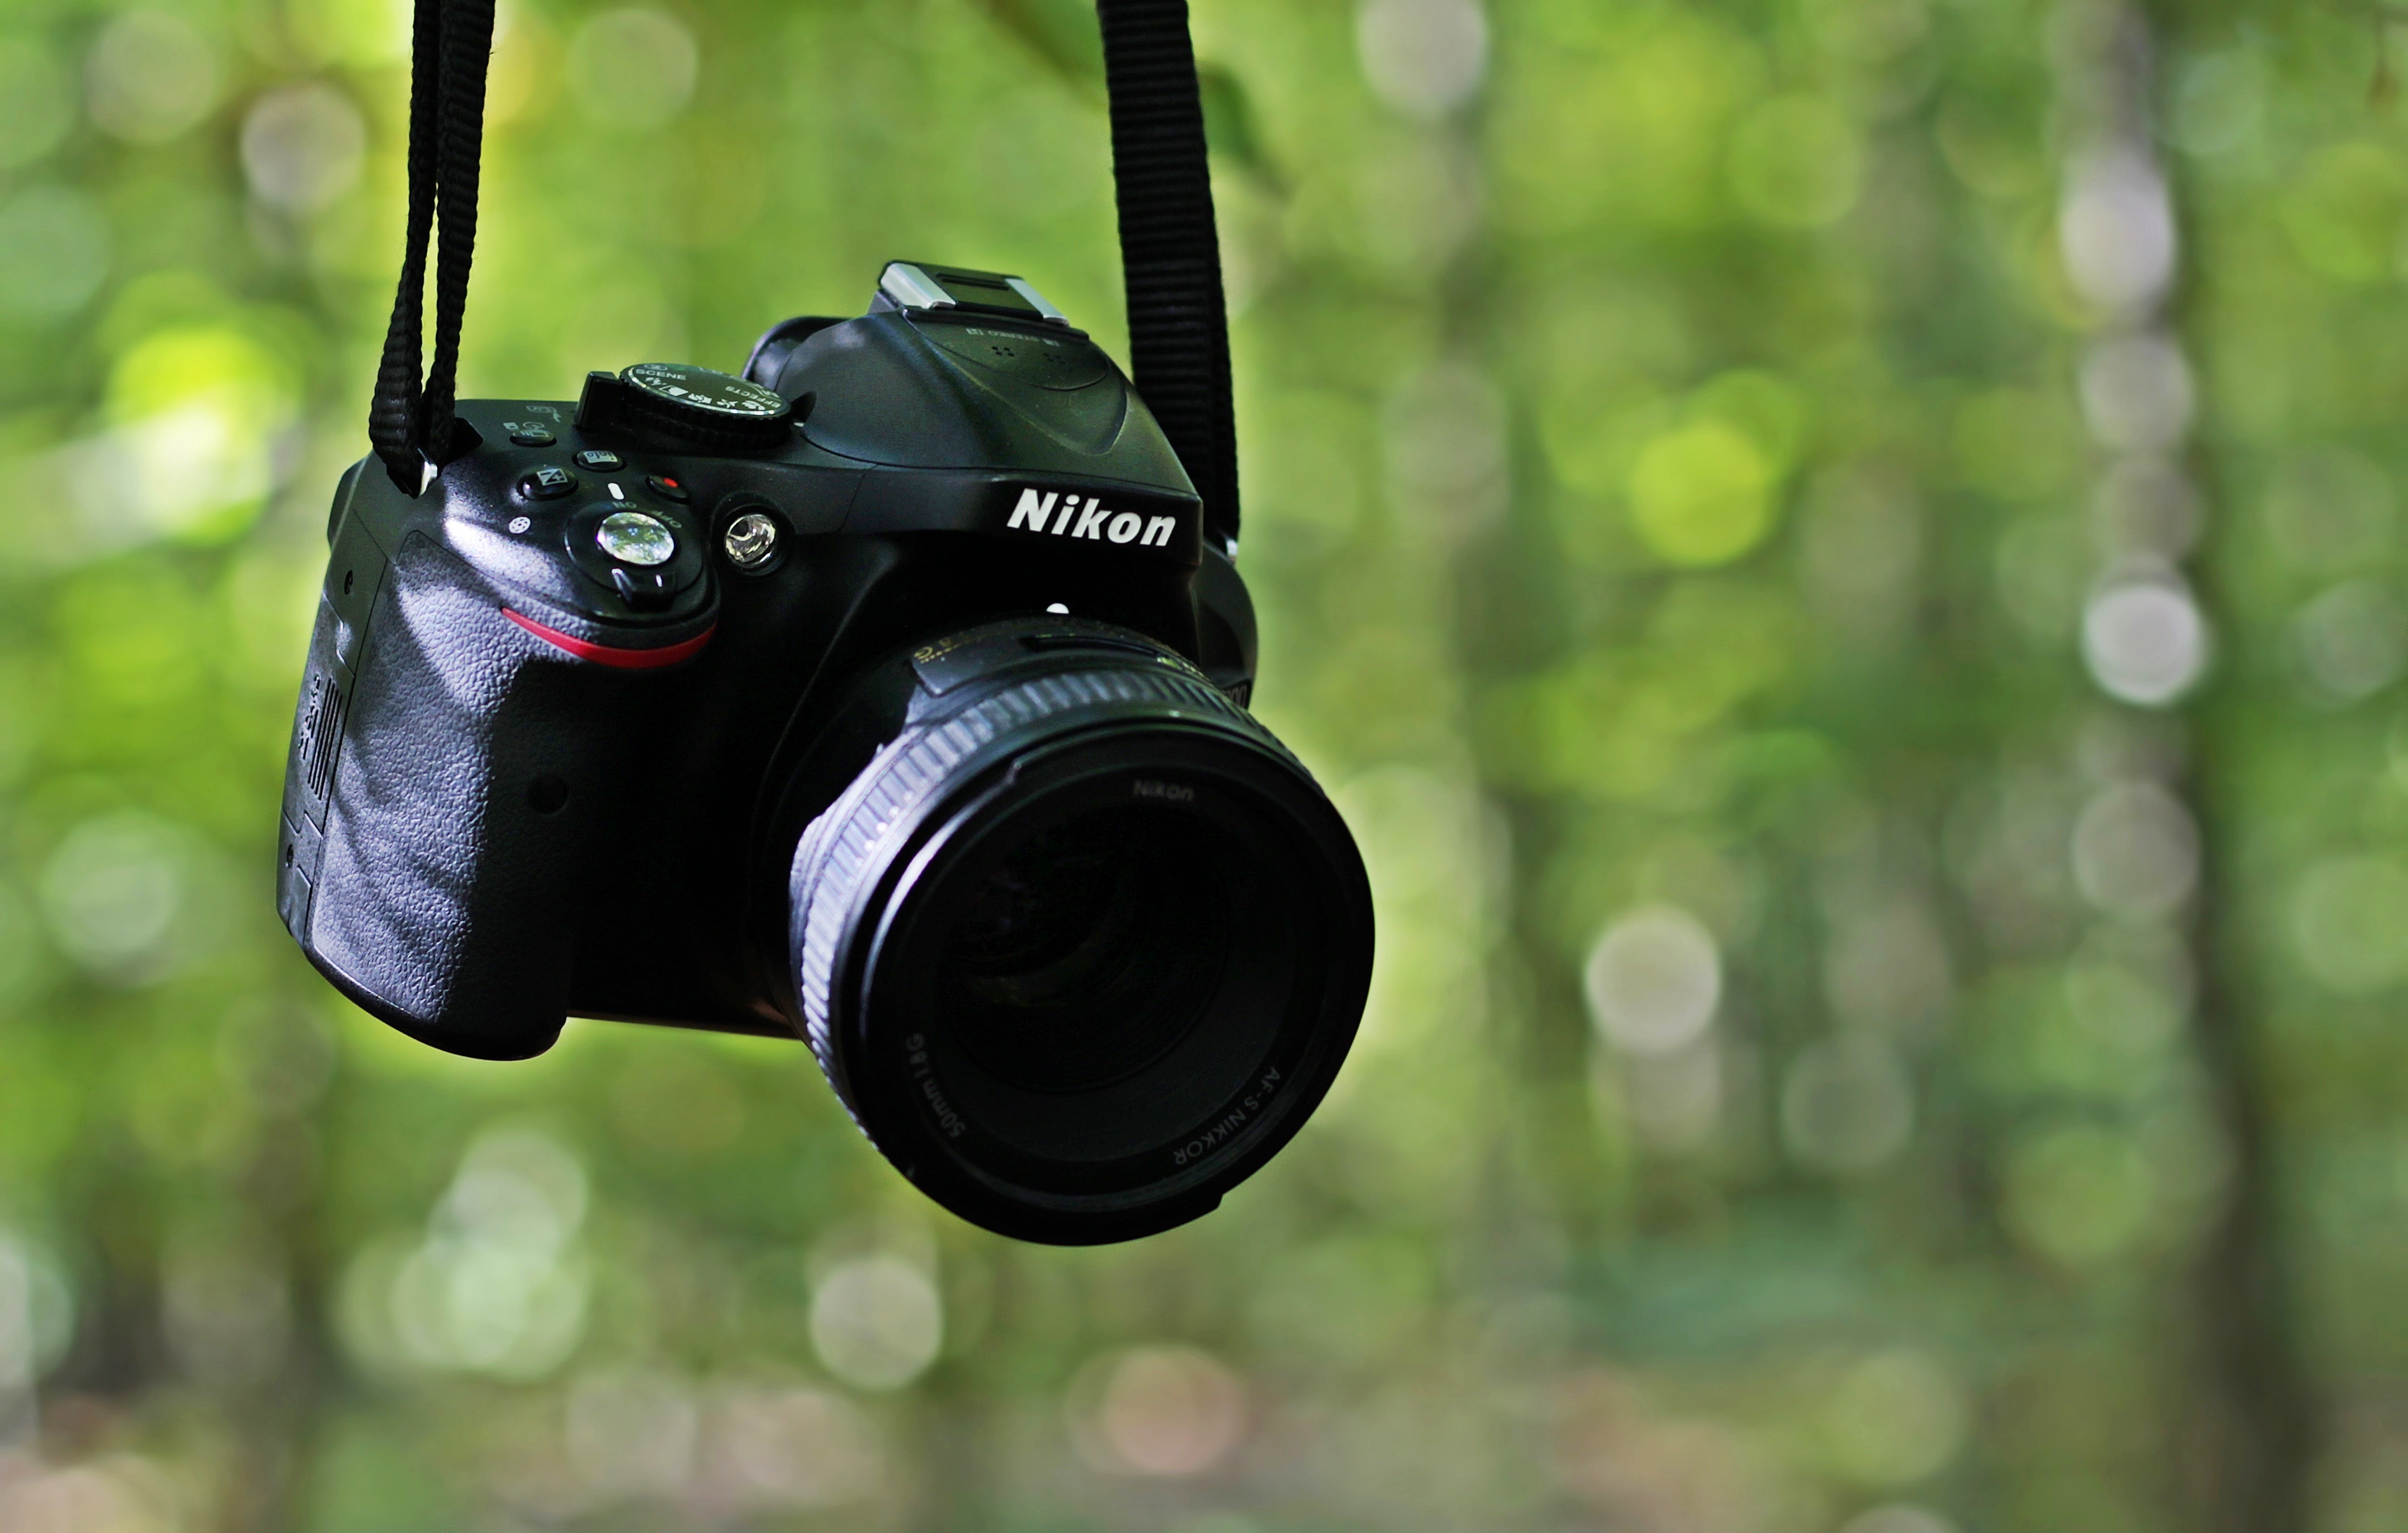 Nikon Digital SLR Camera by pixel2013